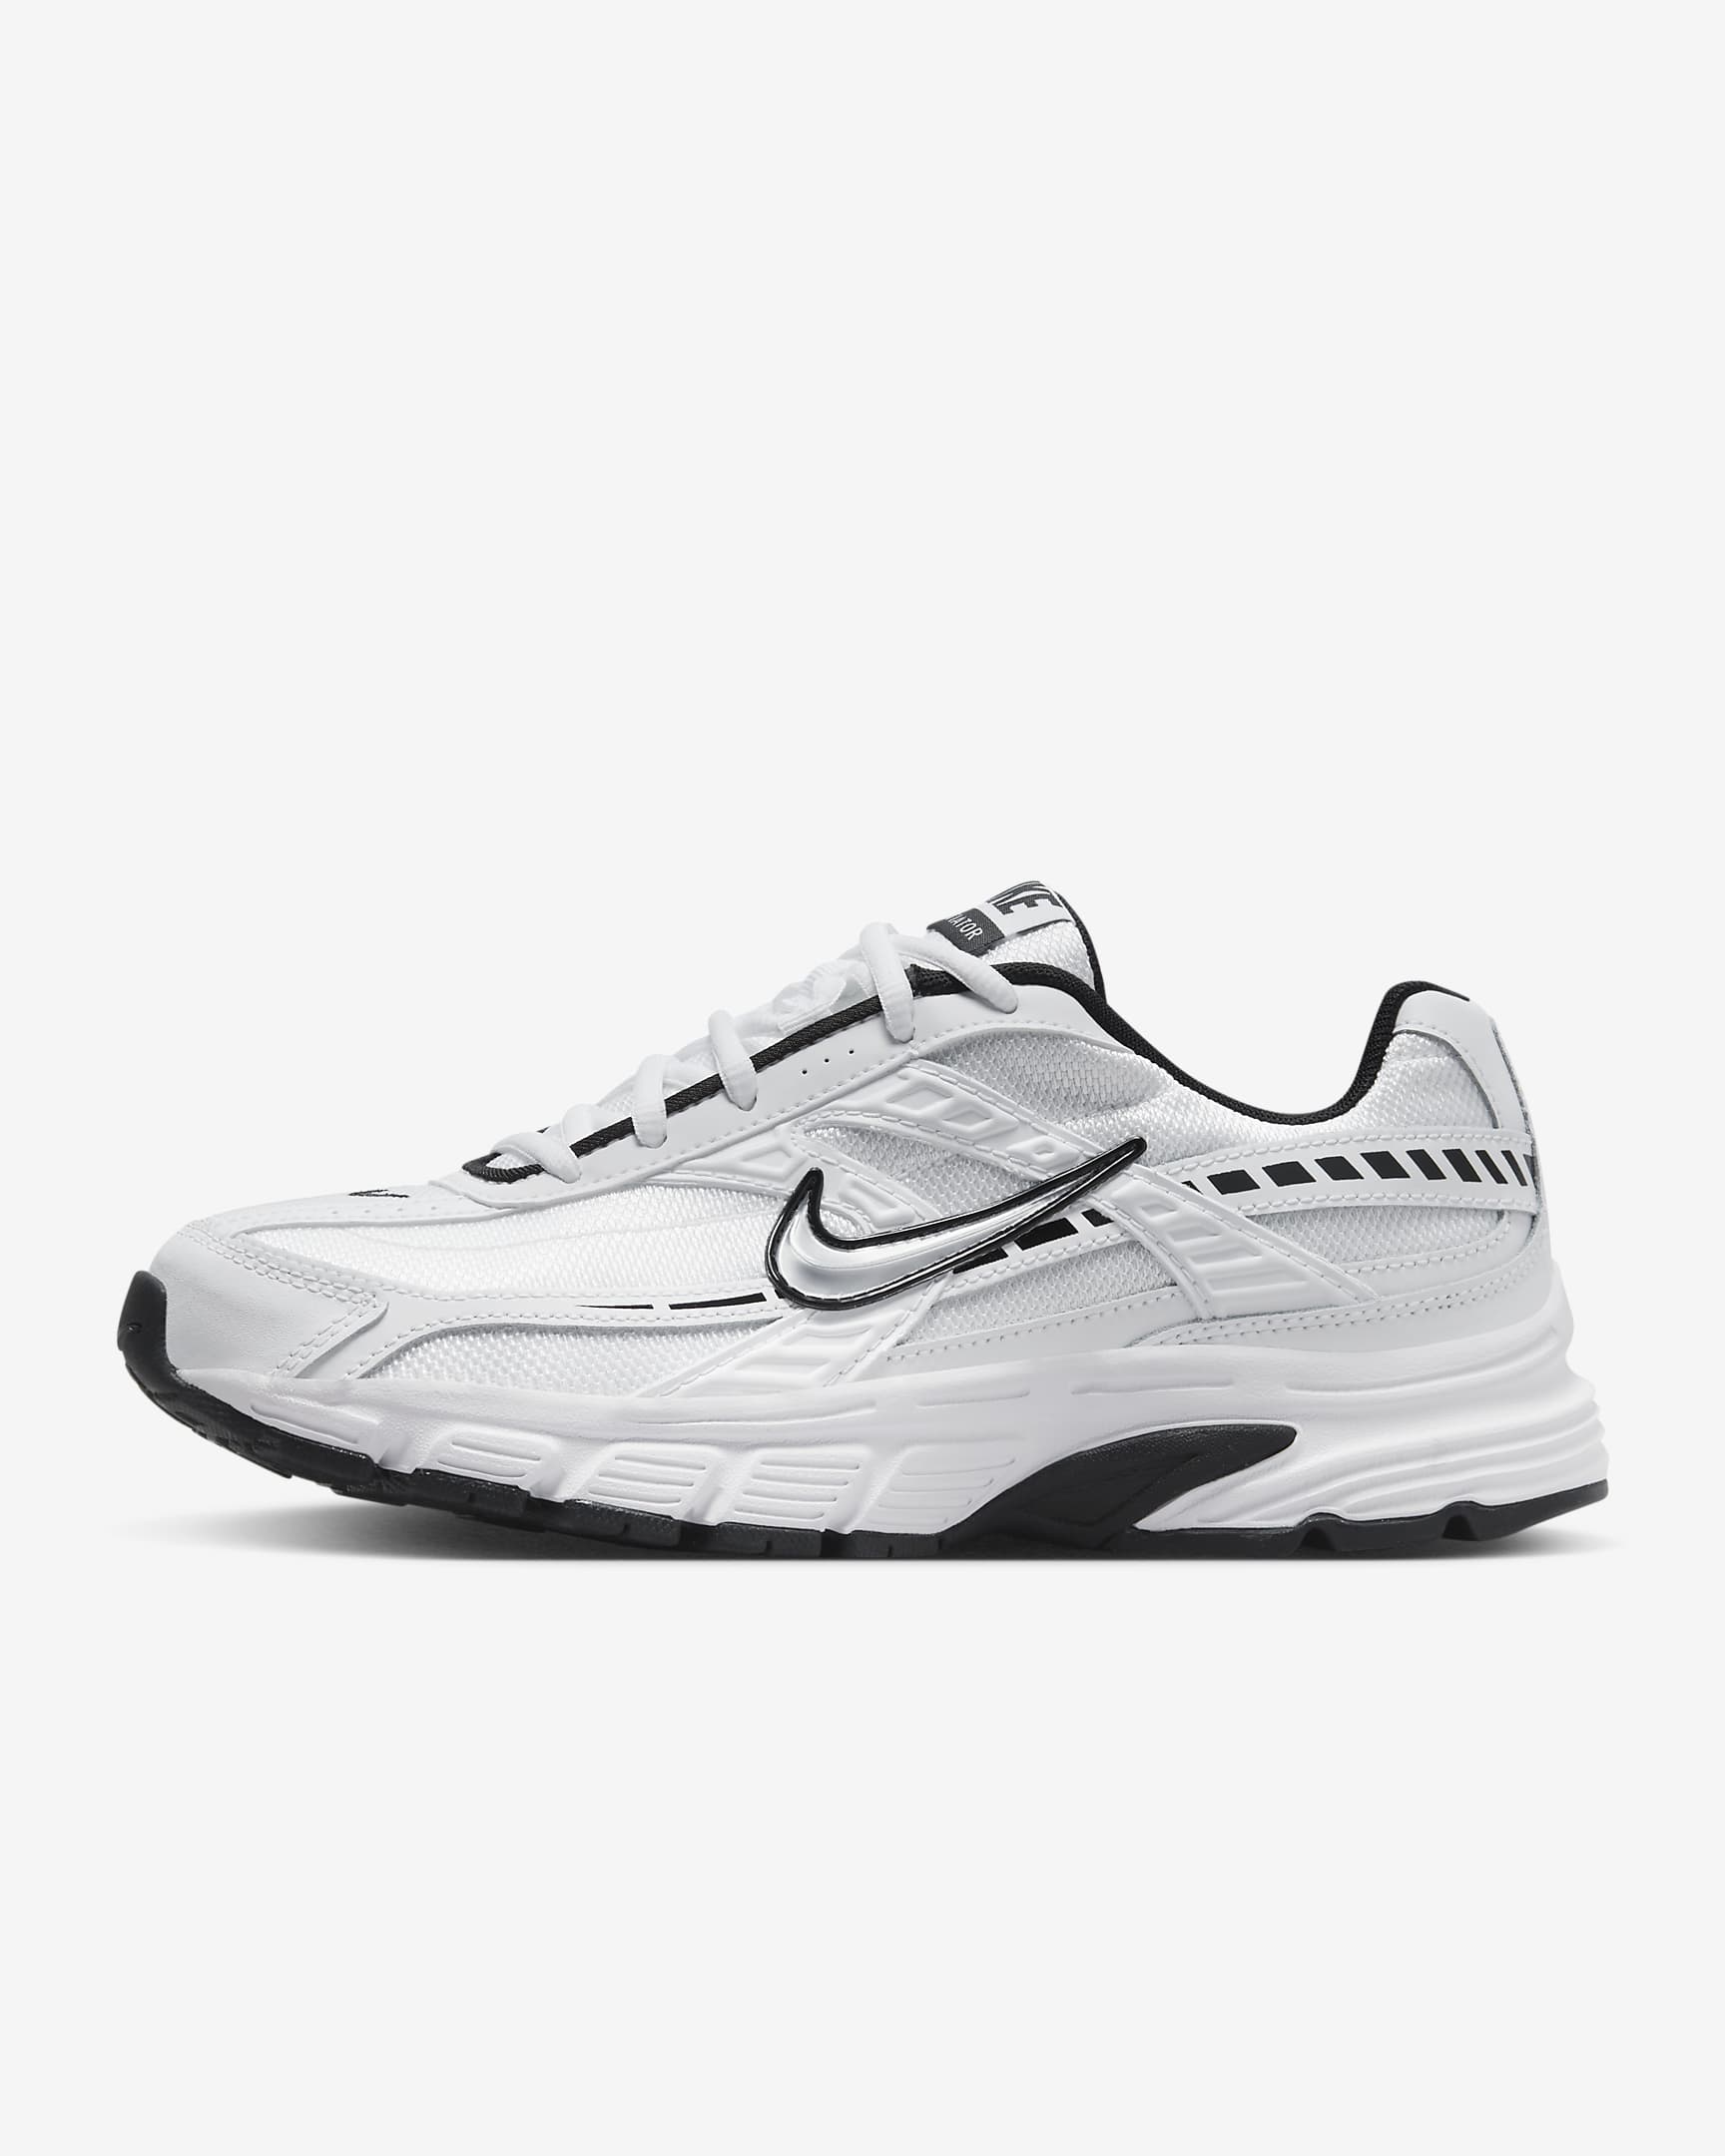 Chaussure Nike Initiator pour femme - Blanc/Blanc/Noir/Metallic Silver